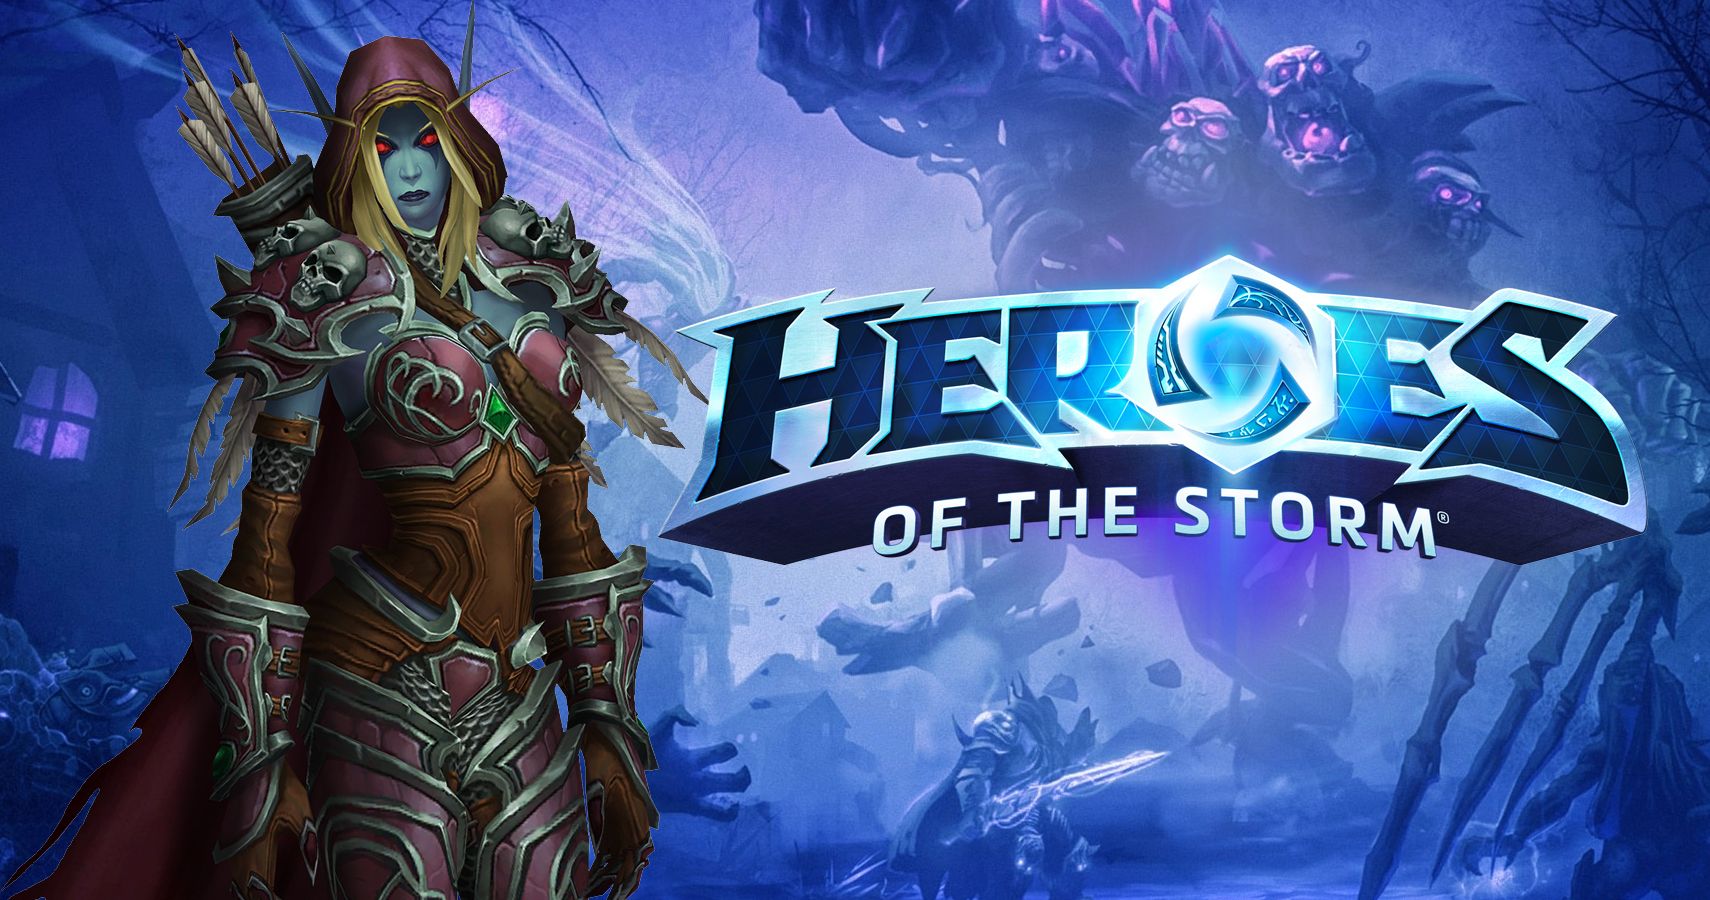 sylvanas heroes of the storm download